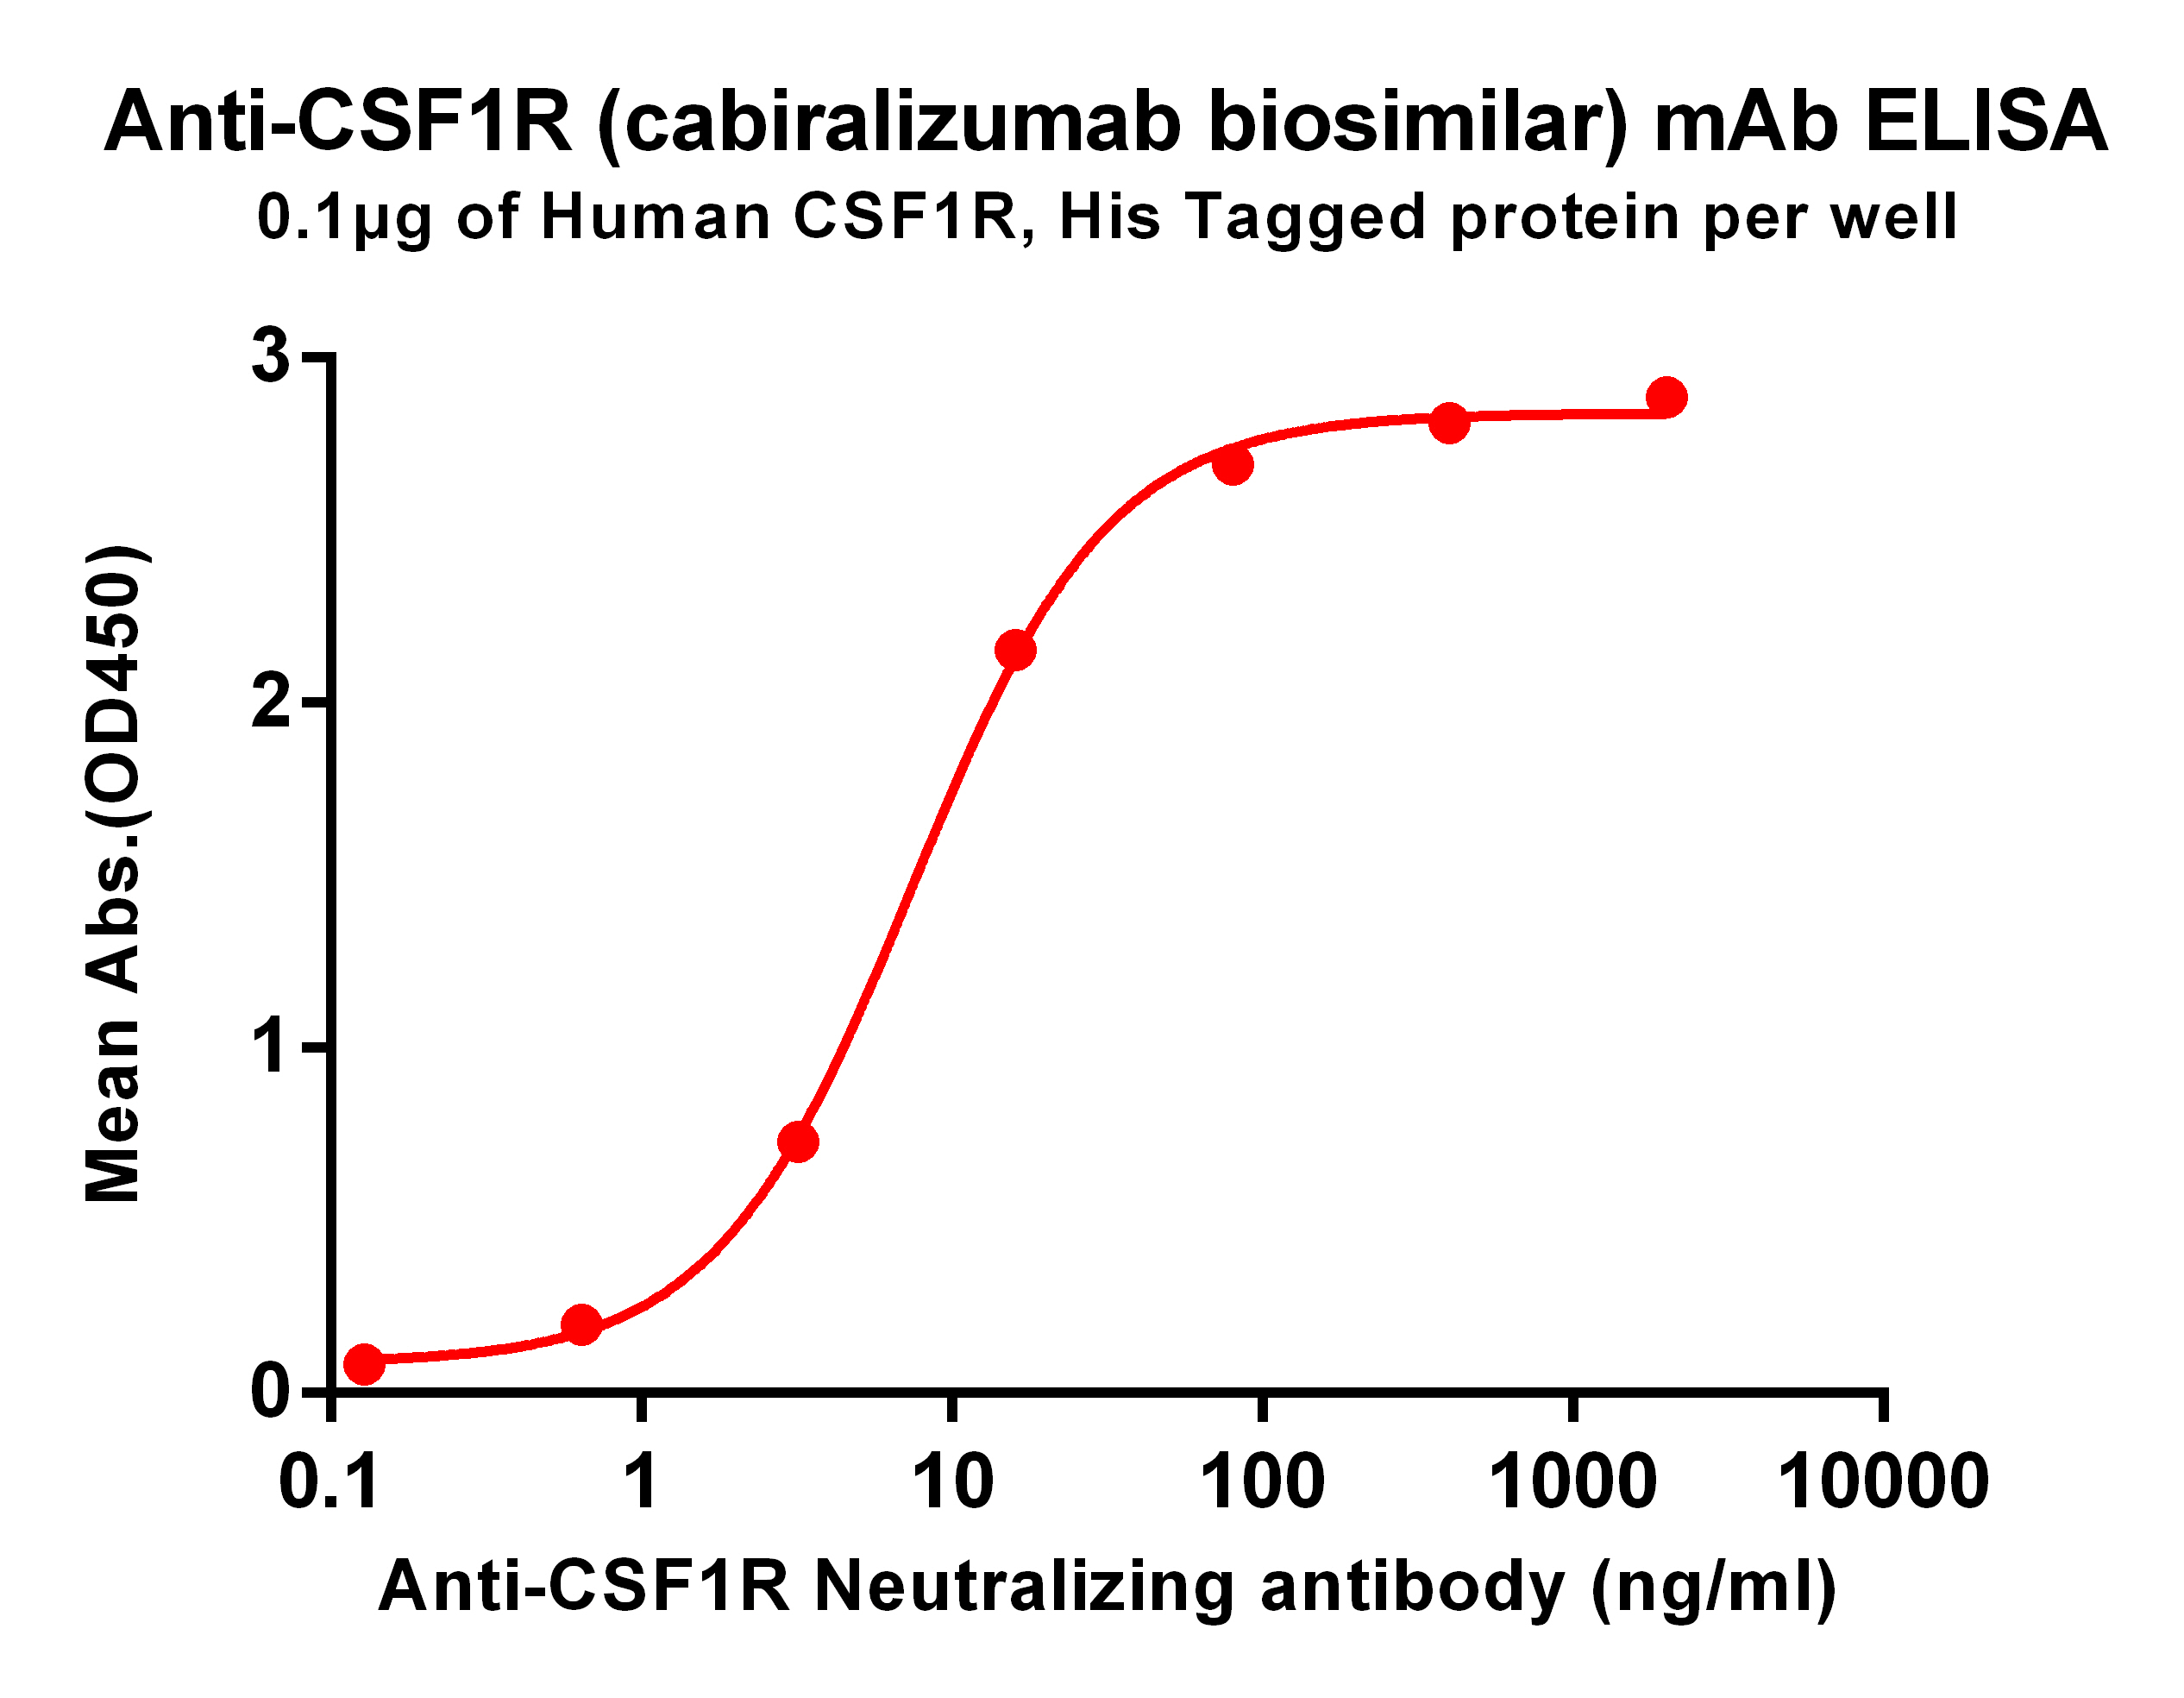 BME100055-Anti-CSF1R-mAbcabiralizumab-biosimilar-ELISA-Fig1.jpg